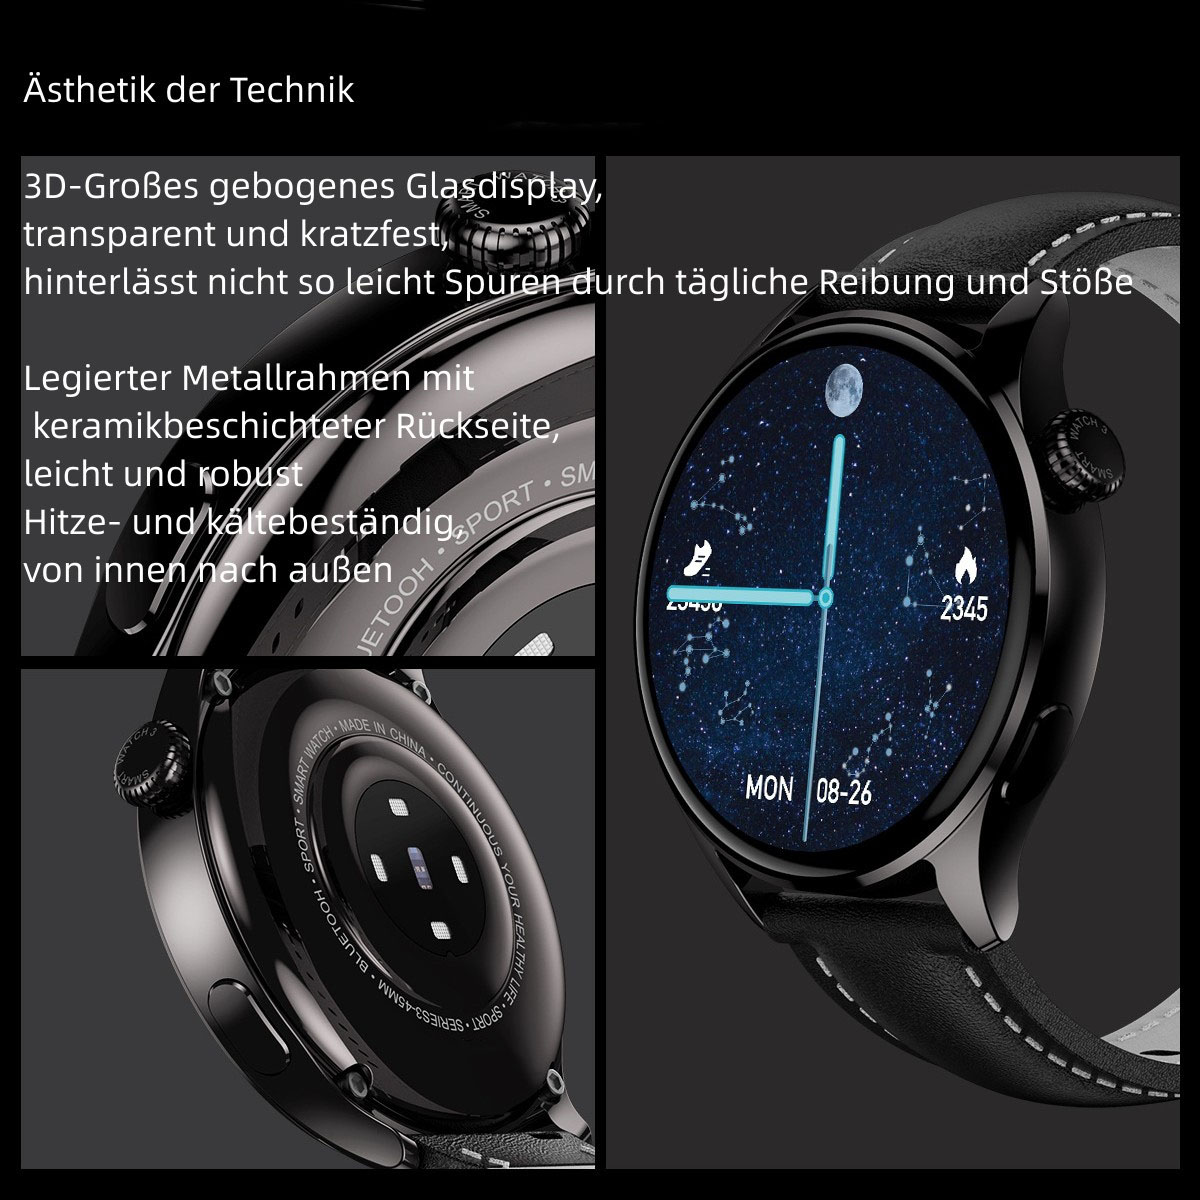 ENBAOXIN Q3 Braun Smart Sports MAX Silikon, + Watch NFC-Zugangsschlüssel, Smartwatch AI-Sprachassistent Zinklegierung Vakuumbeschichtung - Gürtel, GPS-Sport-Track